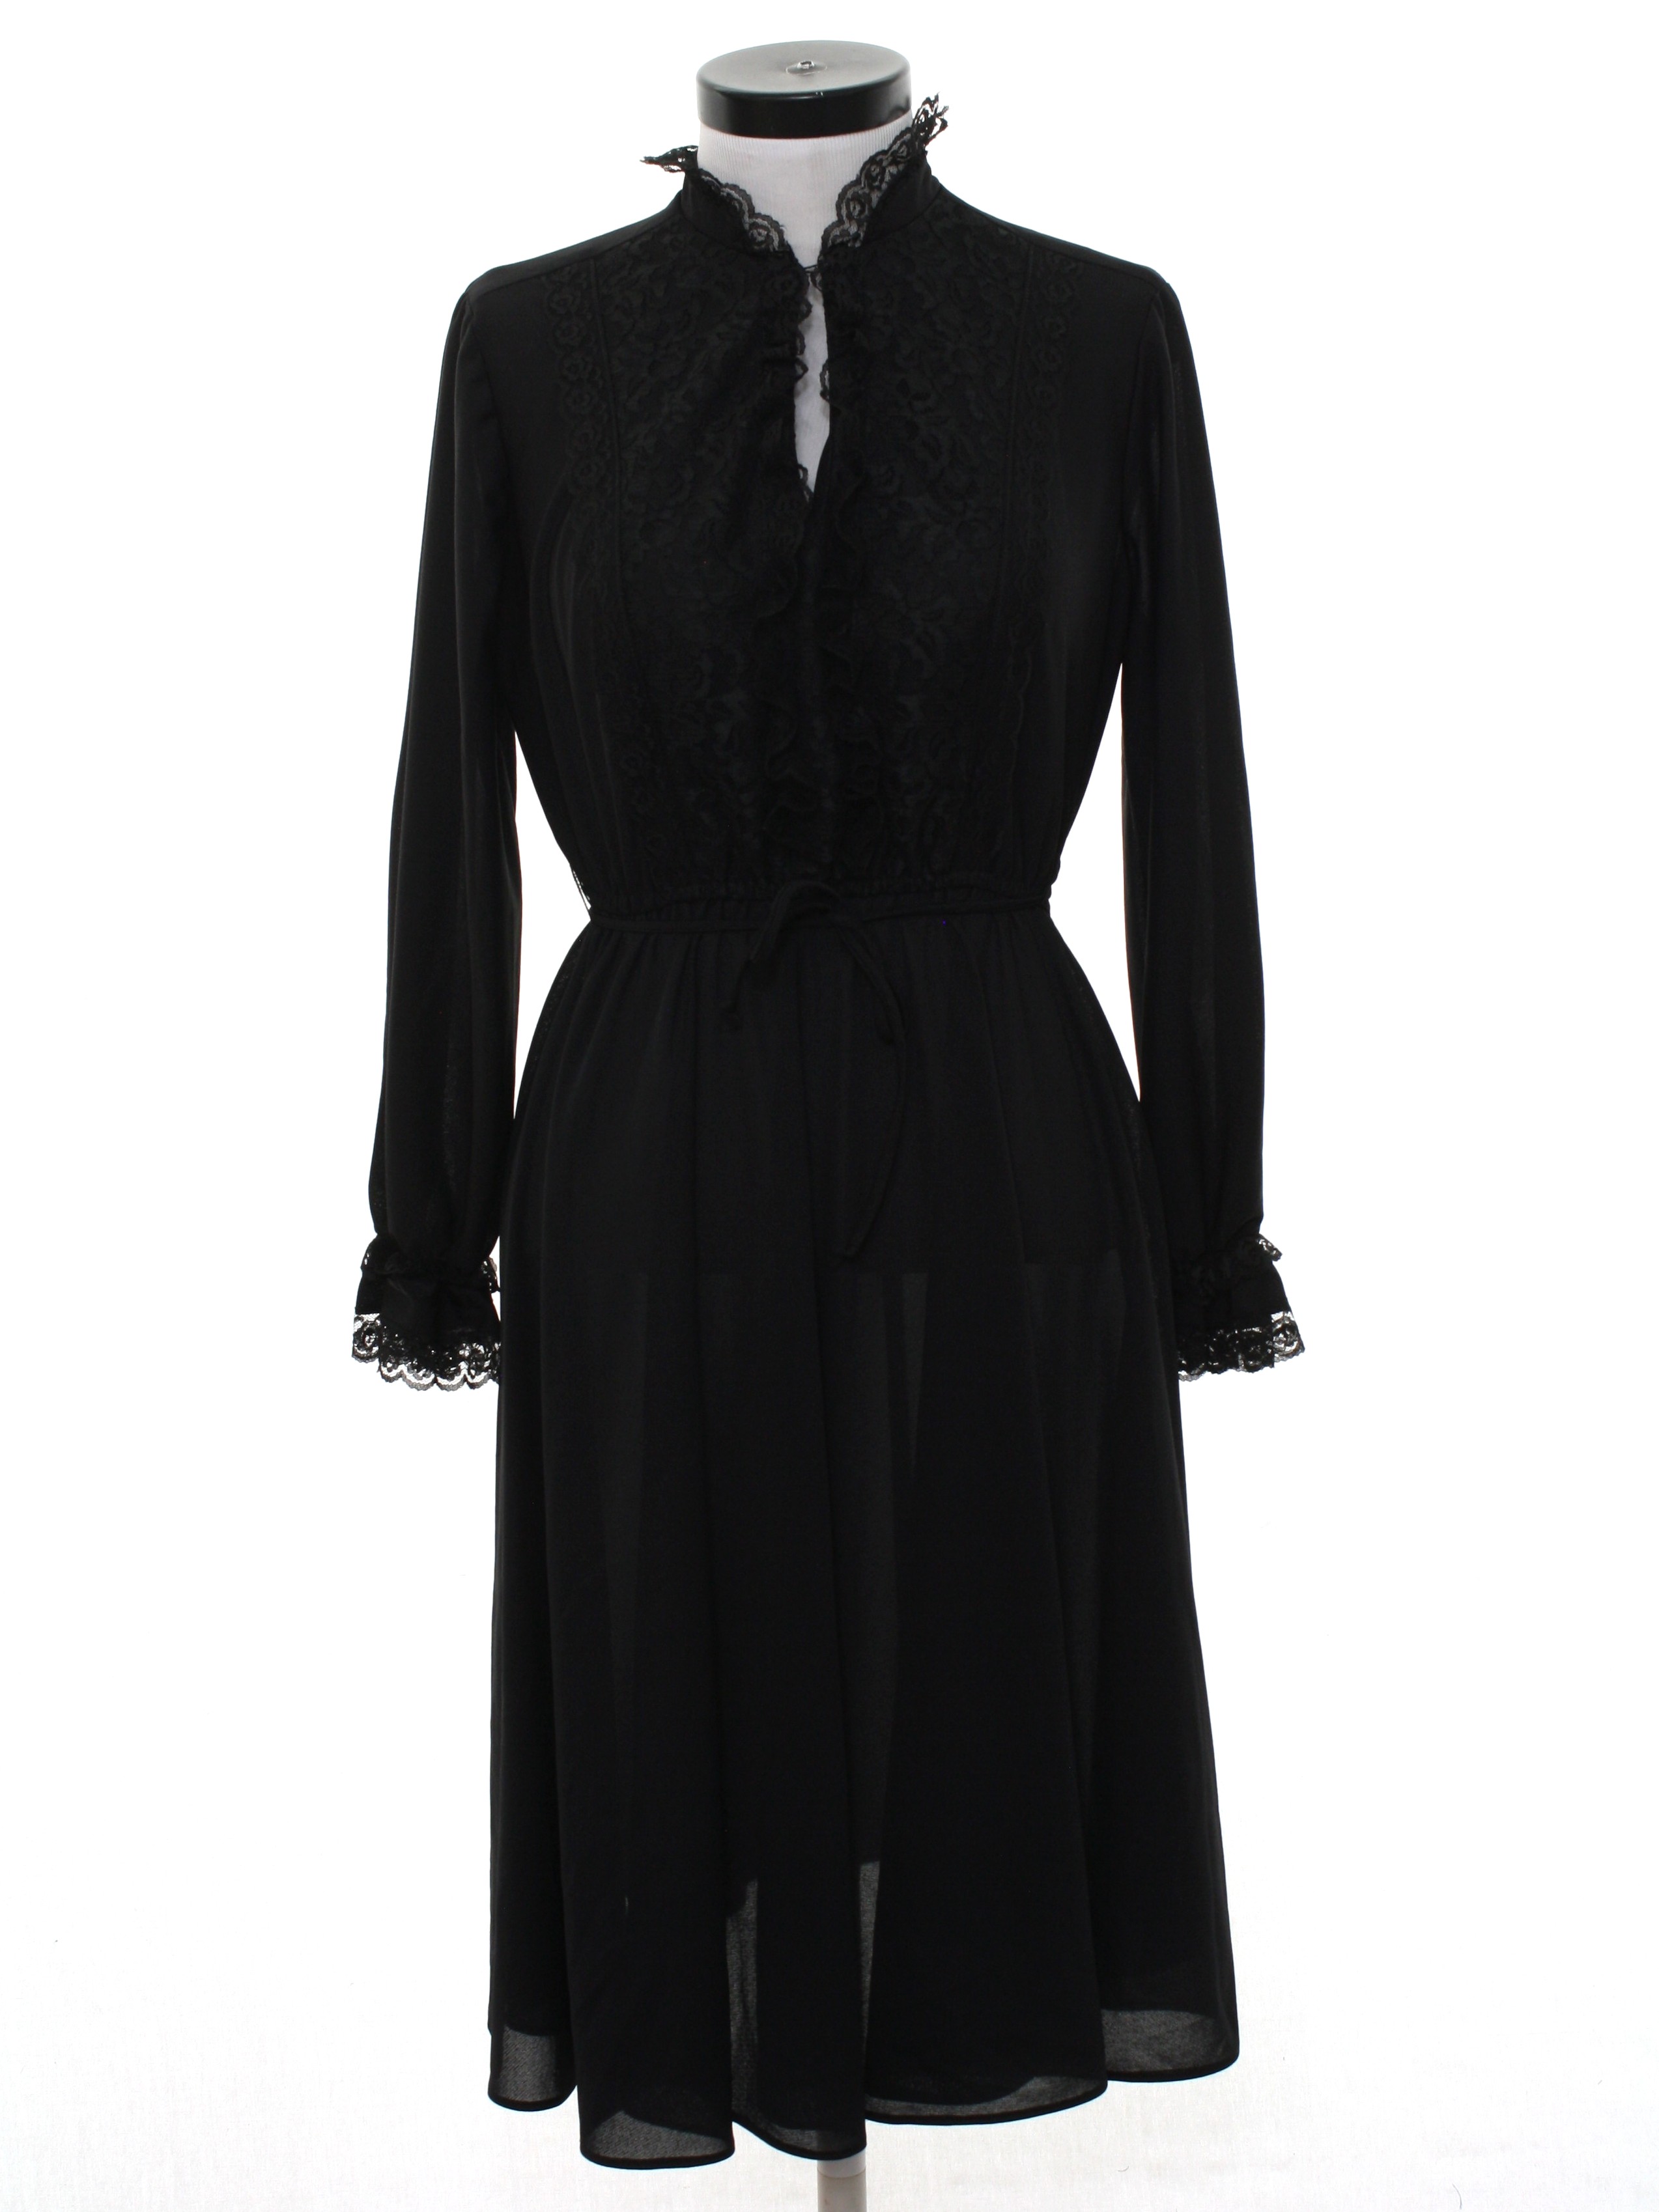 70s black tie dress